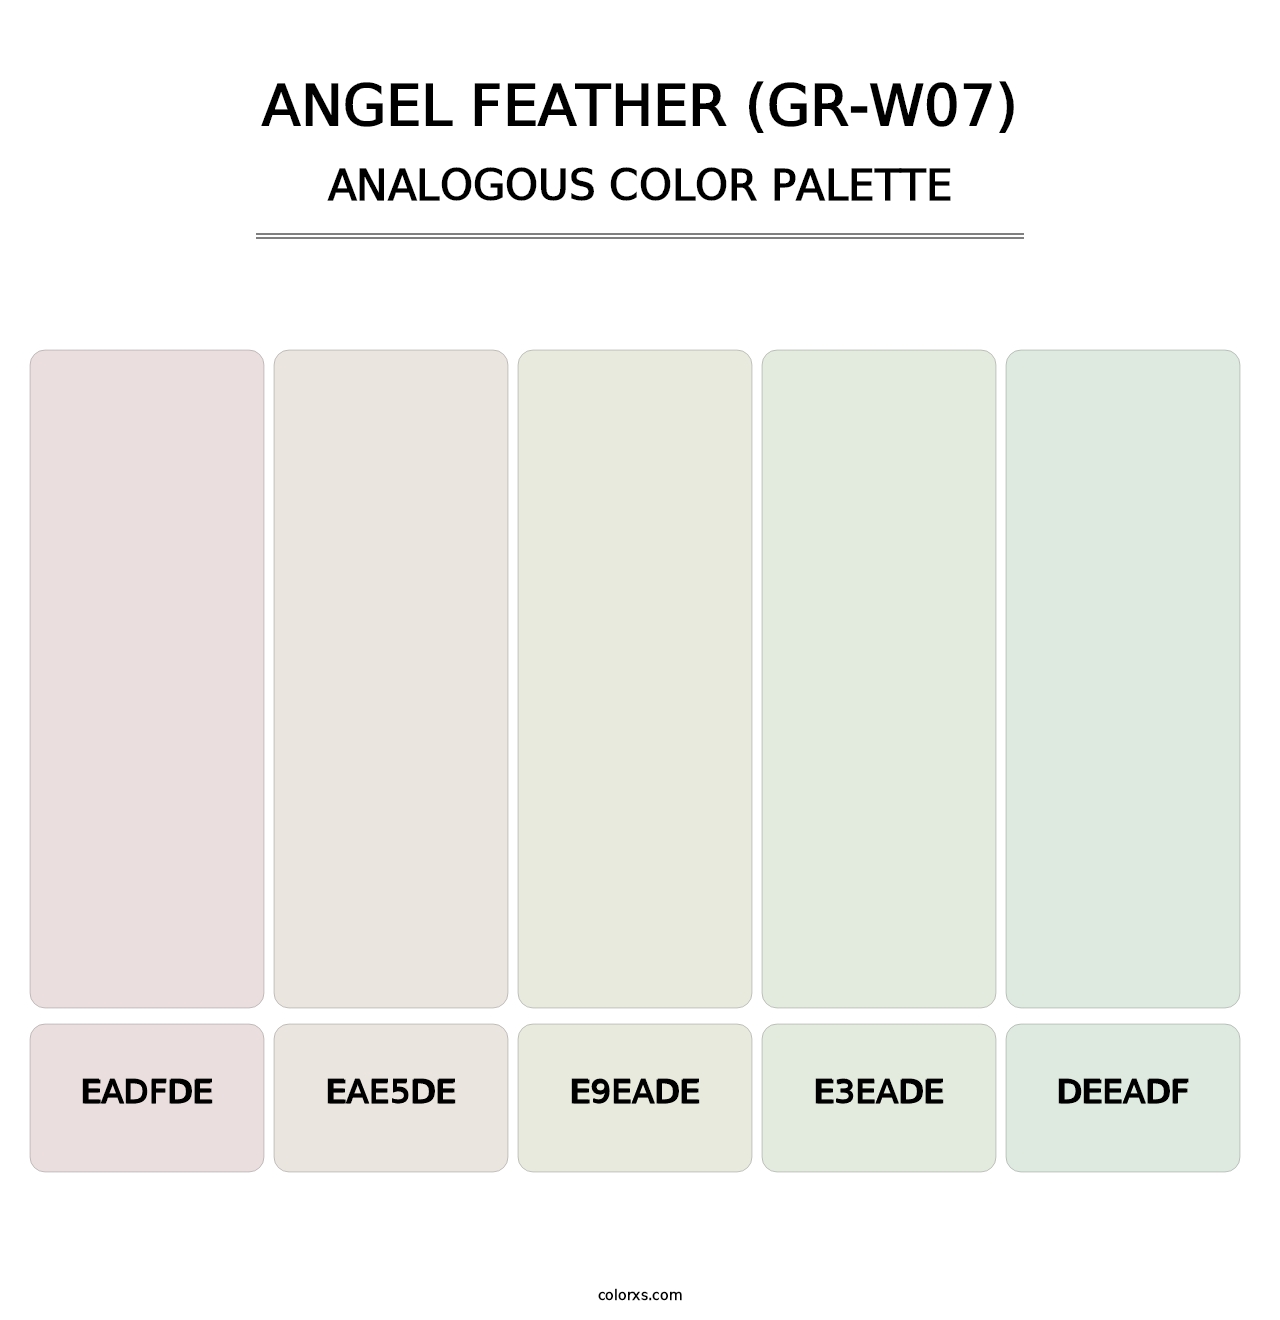 Angel Feather (GR-W07) - Analogous Color Palette